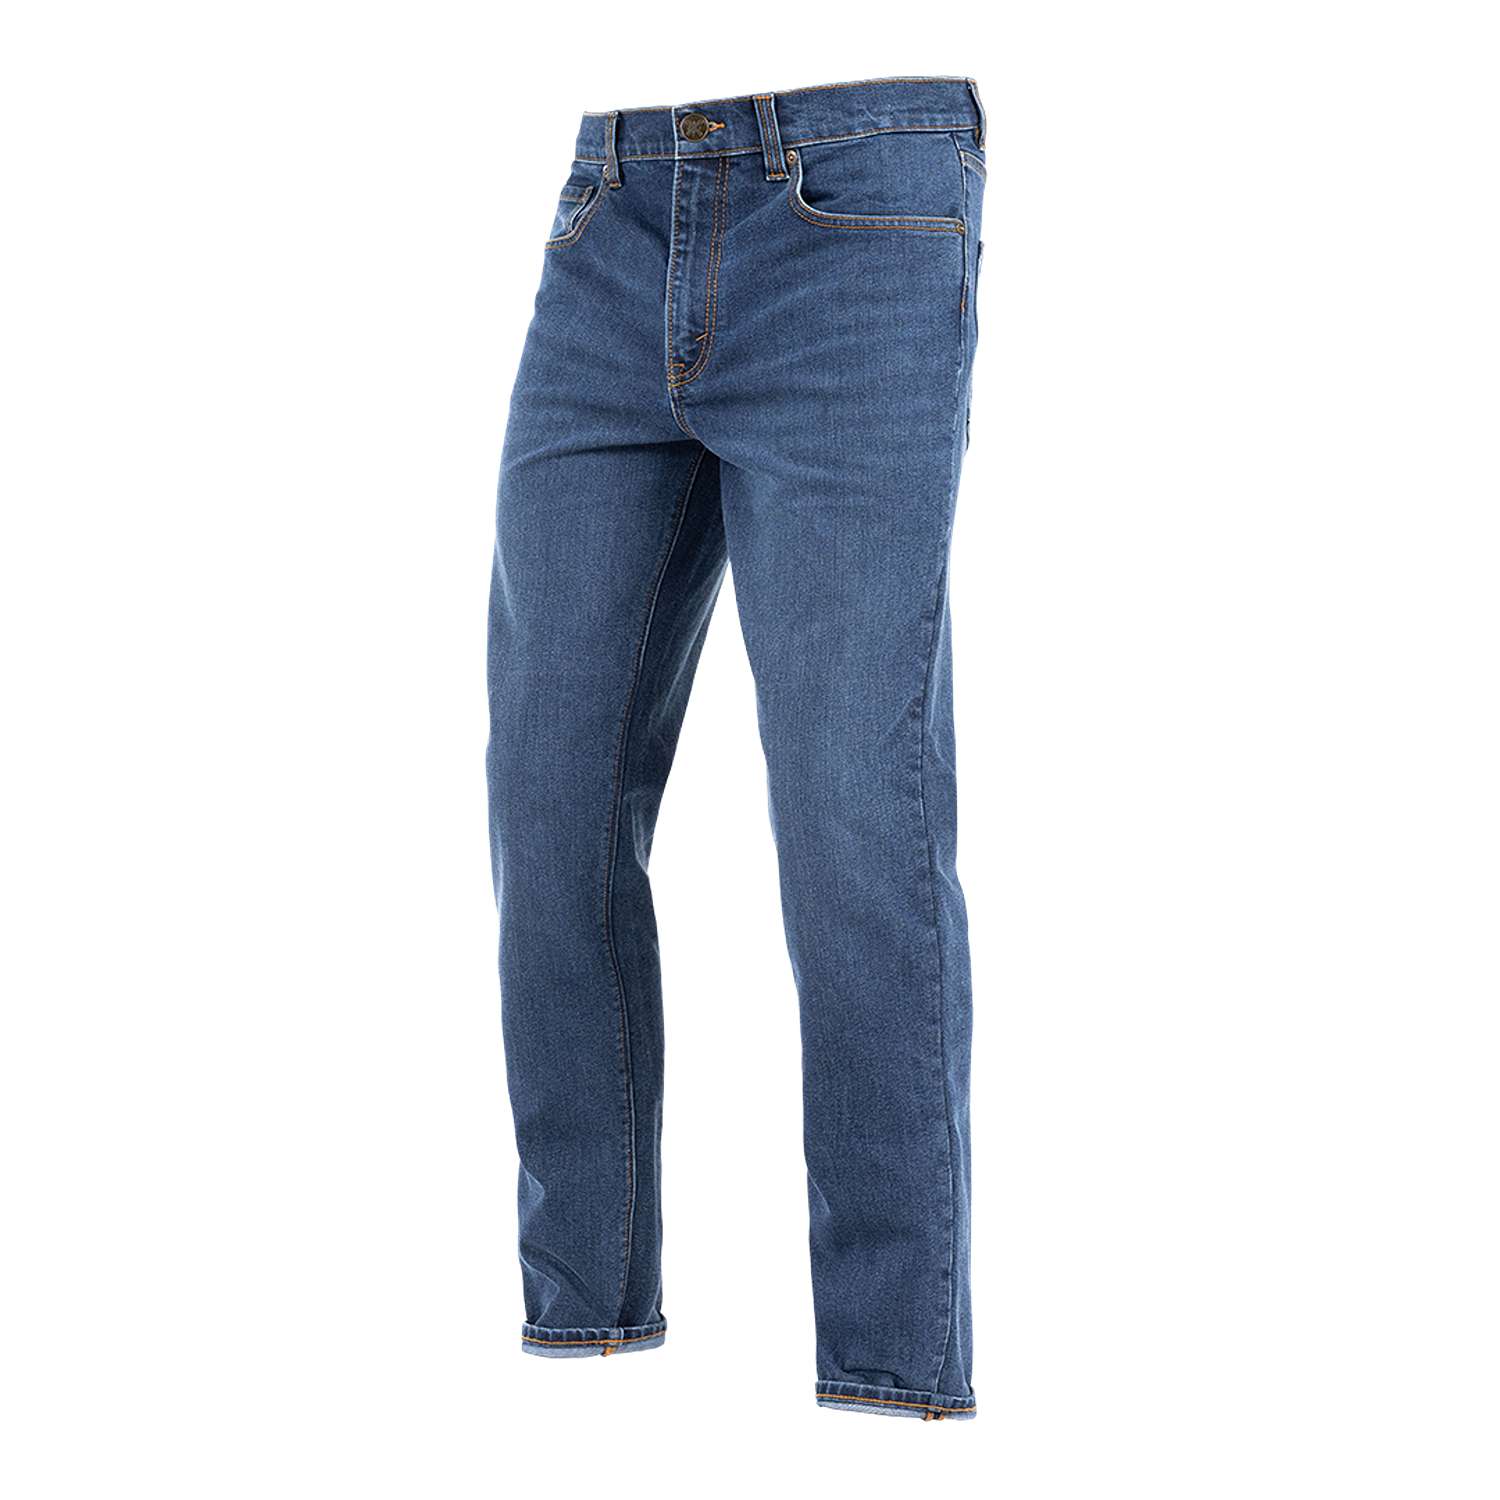 Image of John Doe Classic Tapered Jeans Indigo Size W38/L32 EN